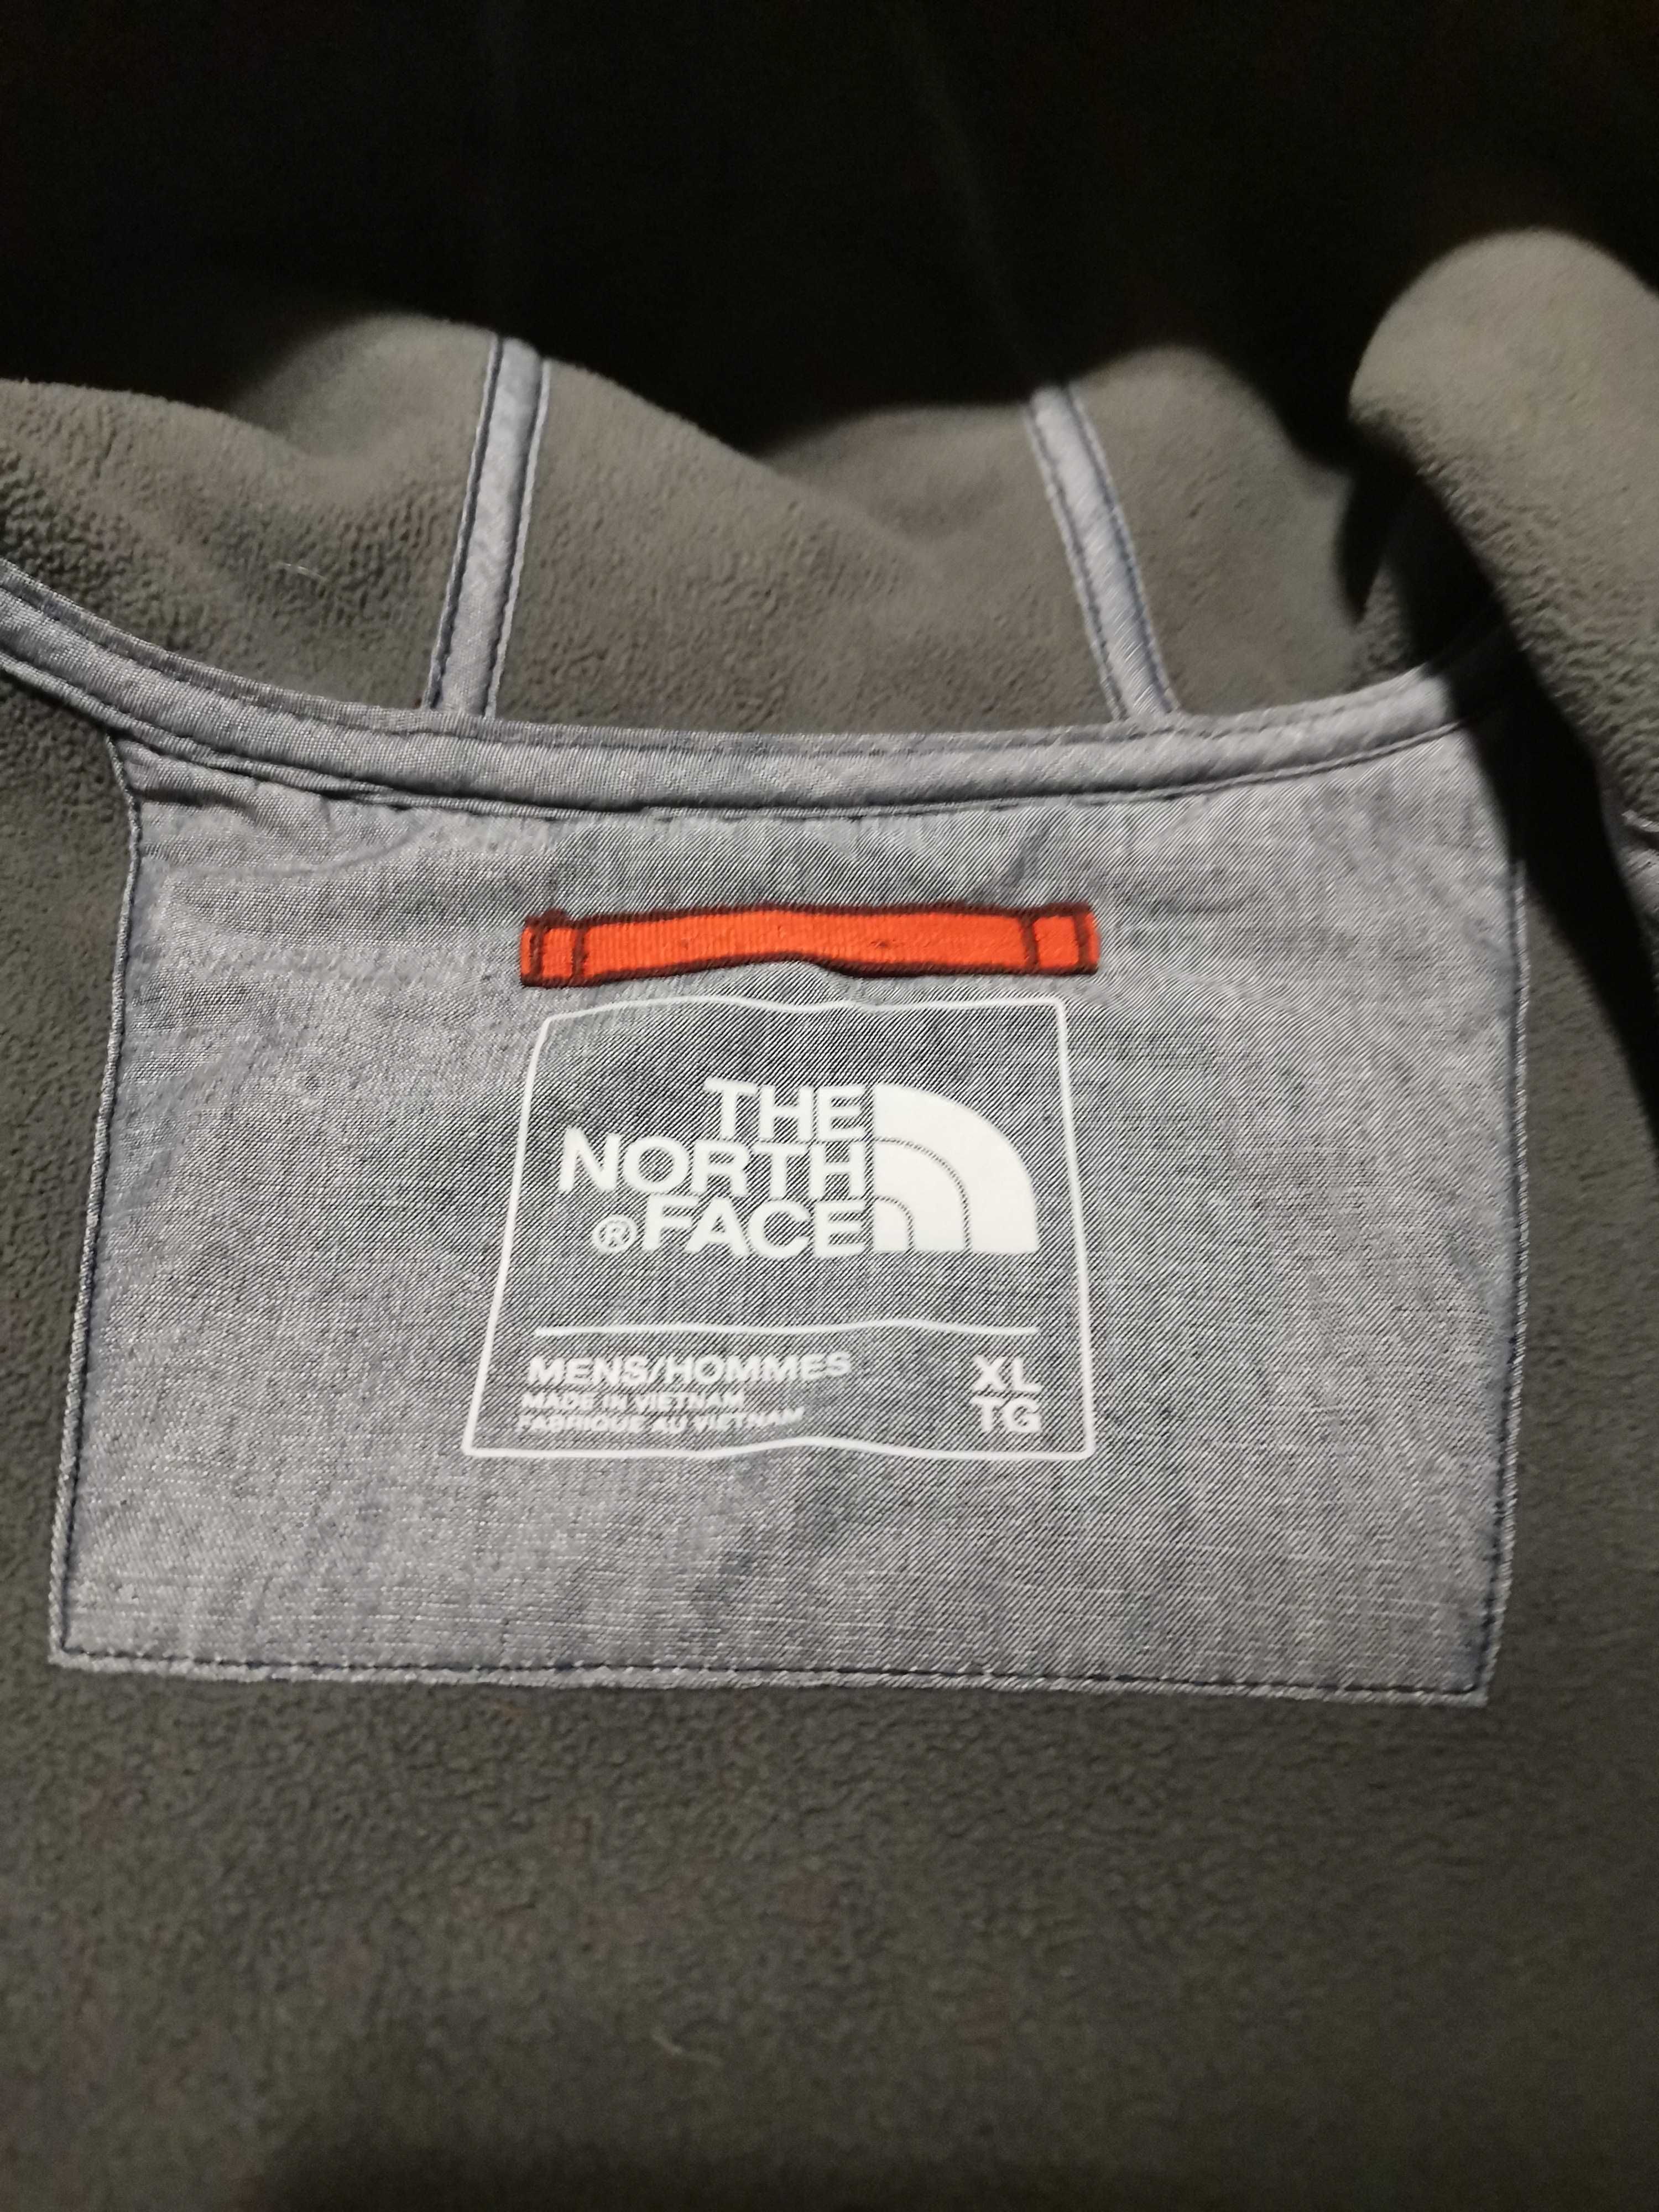 The North Face Hoodie Jacket Full-Zip.